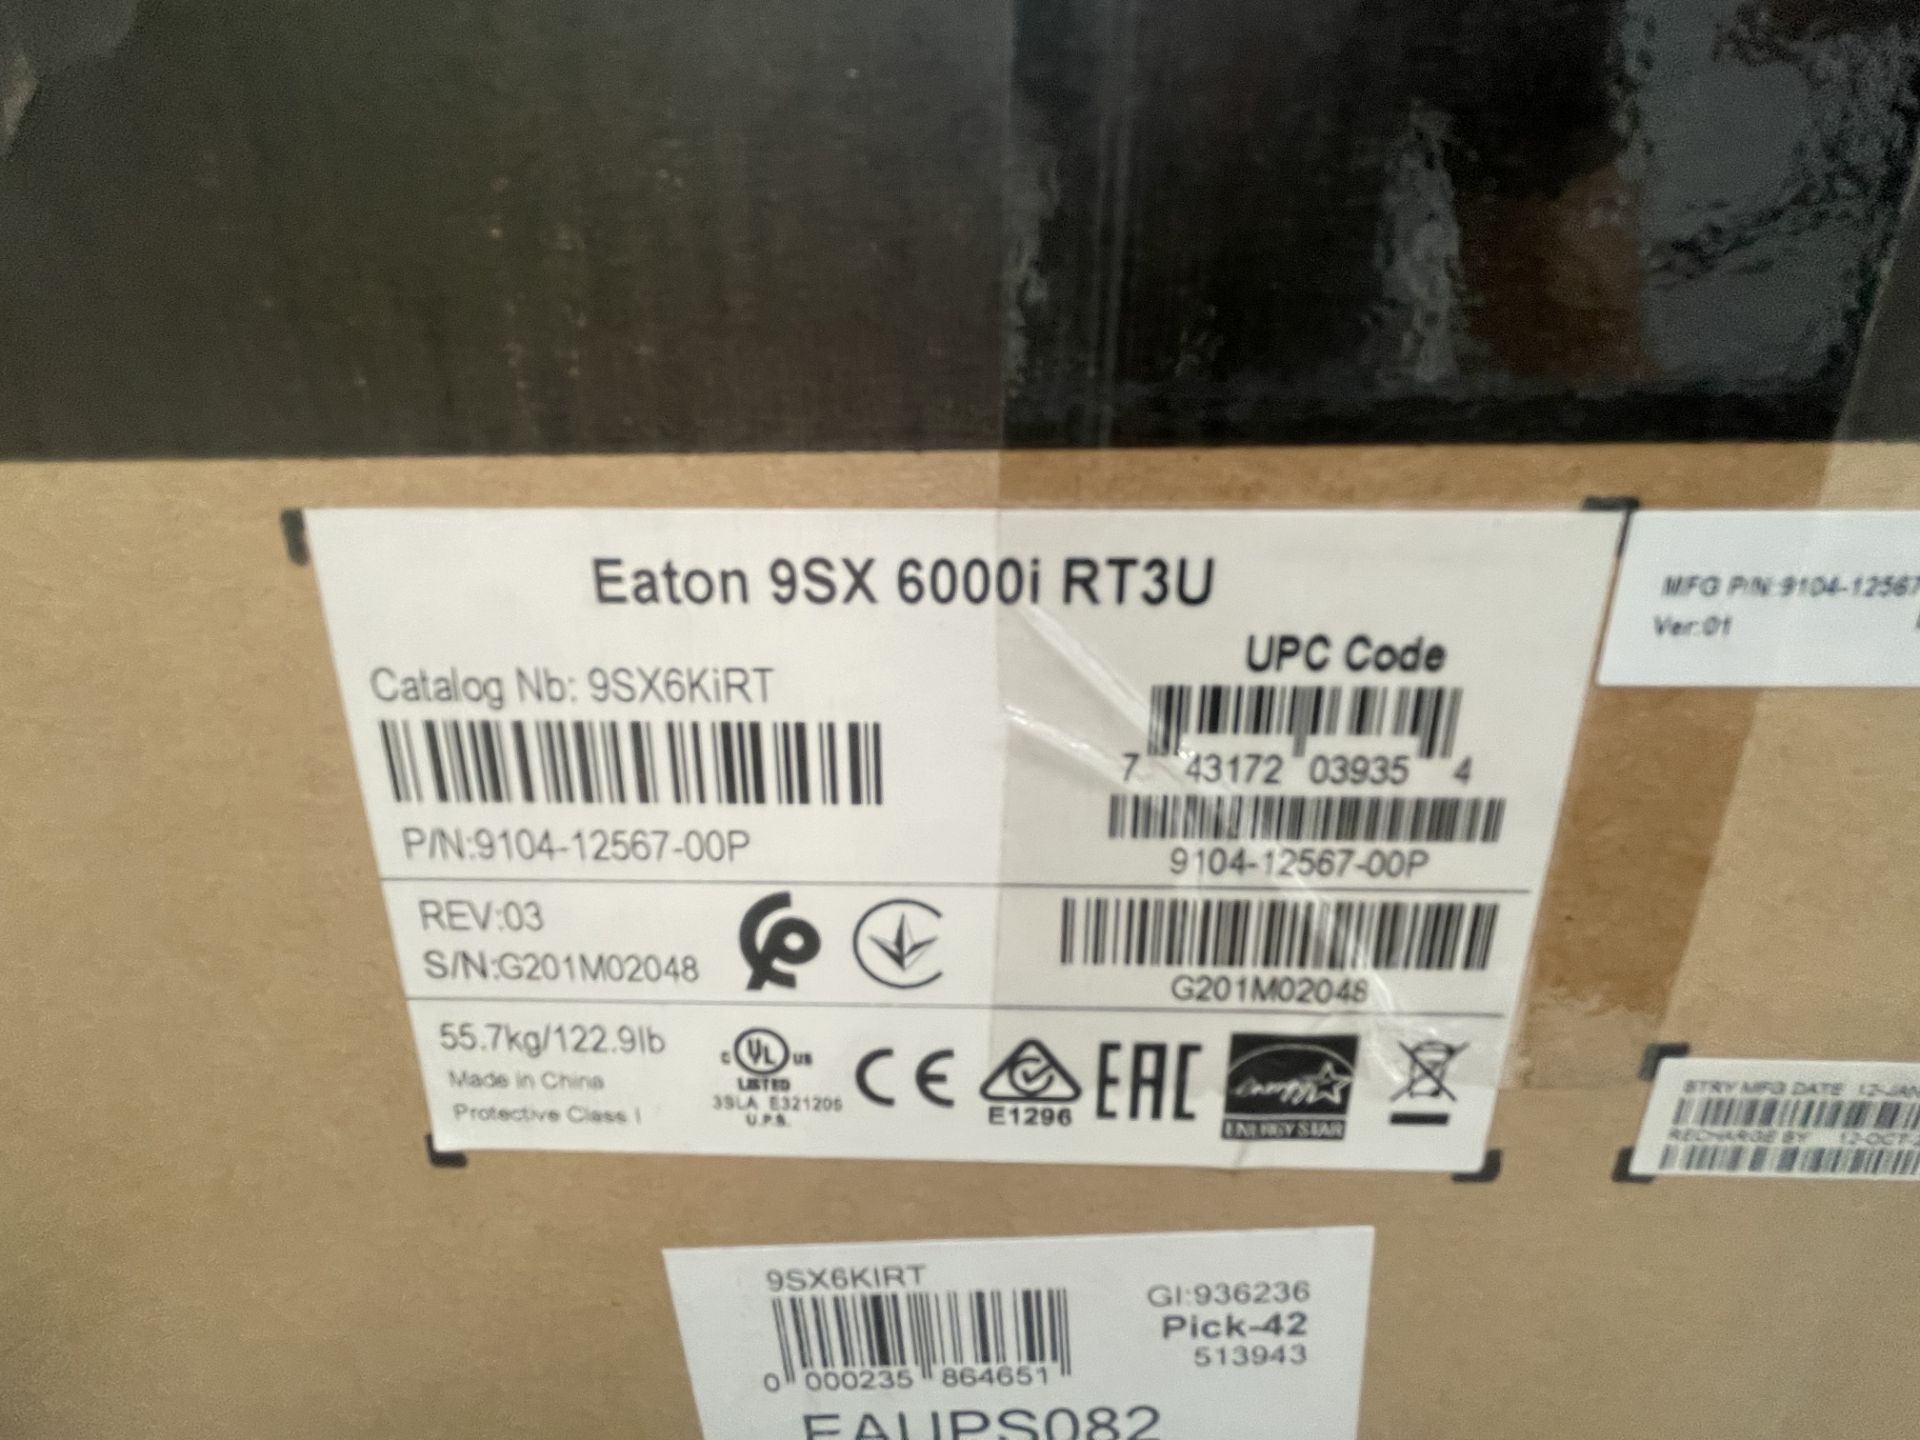 4x (no.) Boxes of Eaton 9sx 6000i RT3U Battery UPS - Image 2 of 2